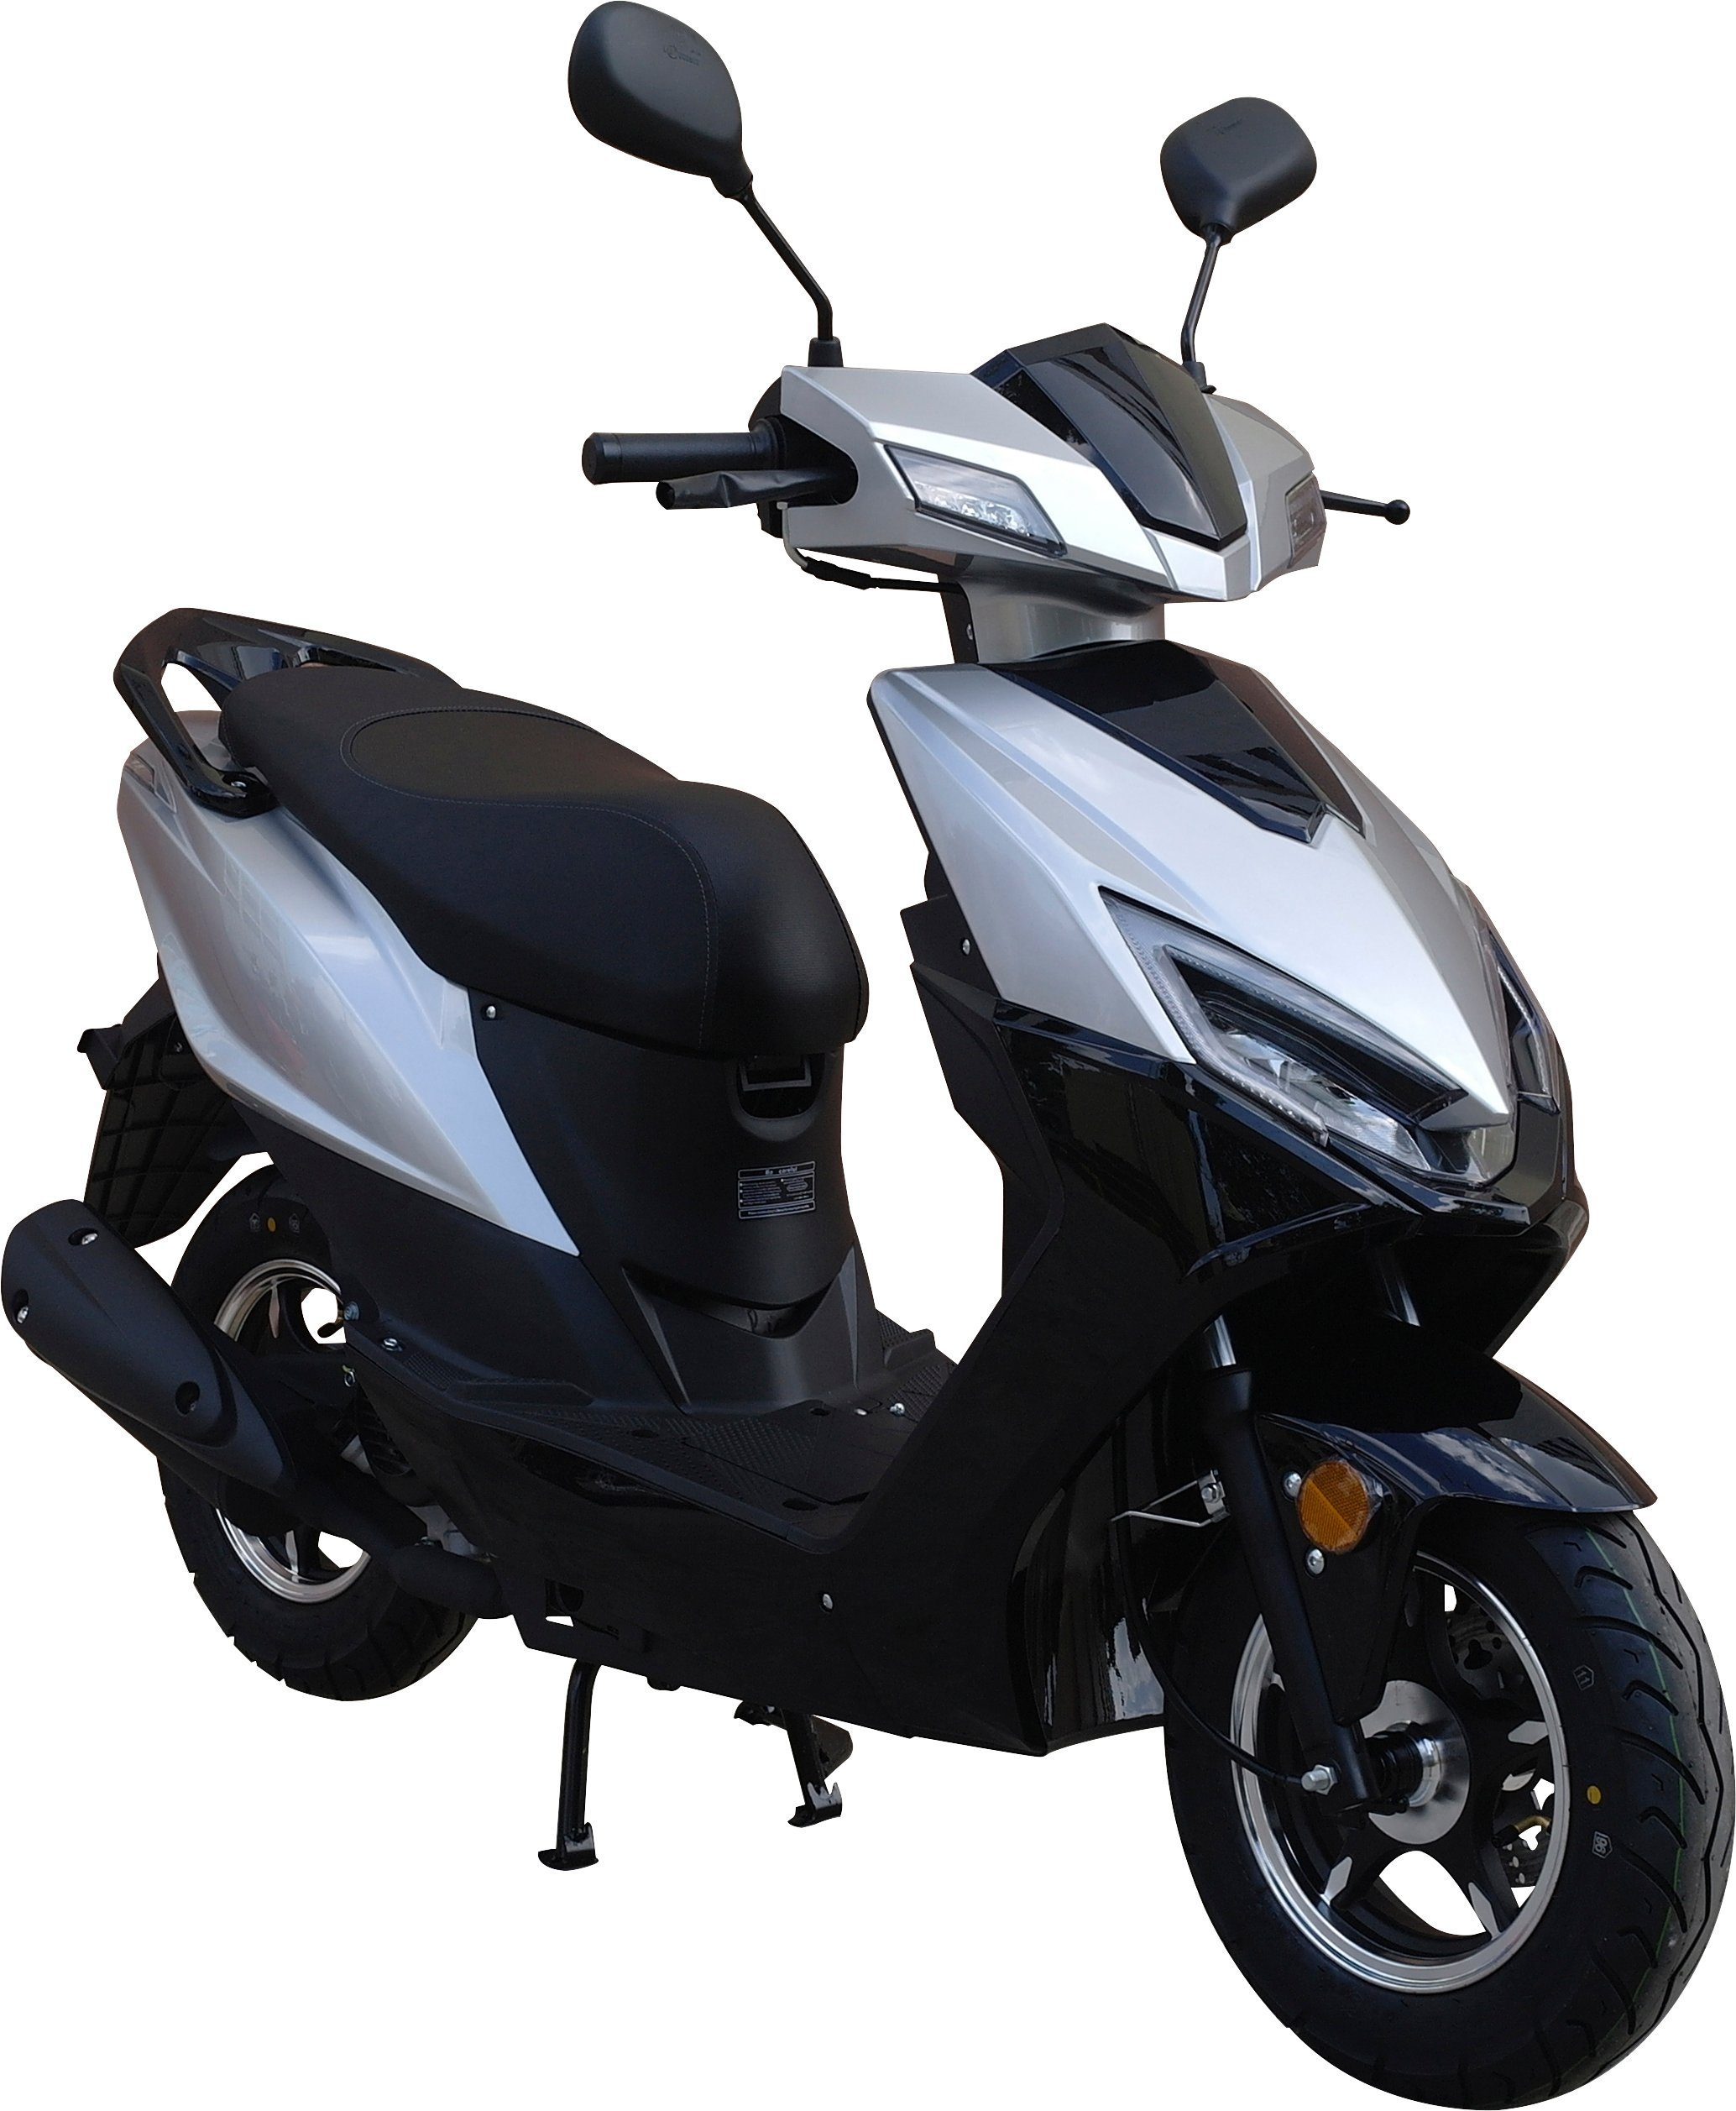 GT UNION Motorroller Sonic X 50-45, 50 ccm, 45 km/h, Euro 5, (Komplett-Set, 2 tlg., mit Topcase), inkl. Topcase silber-schwarz